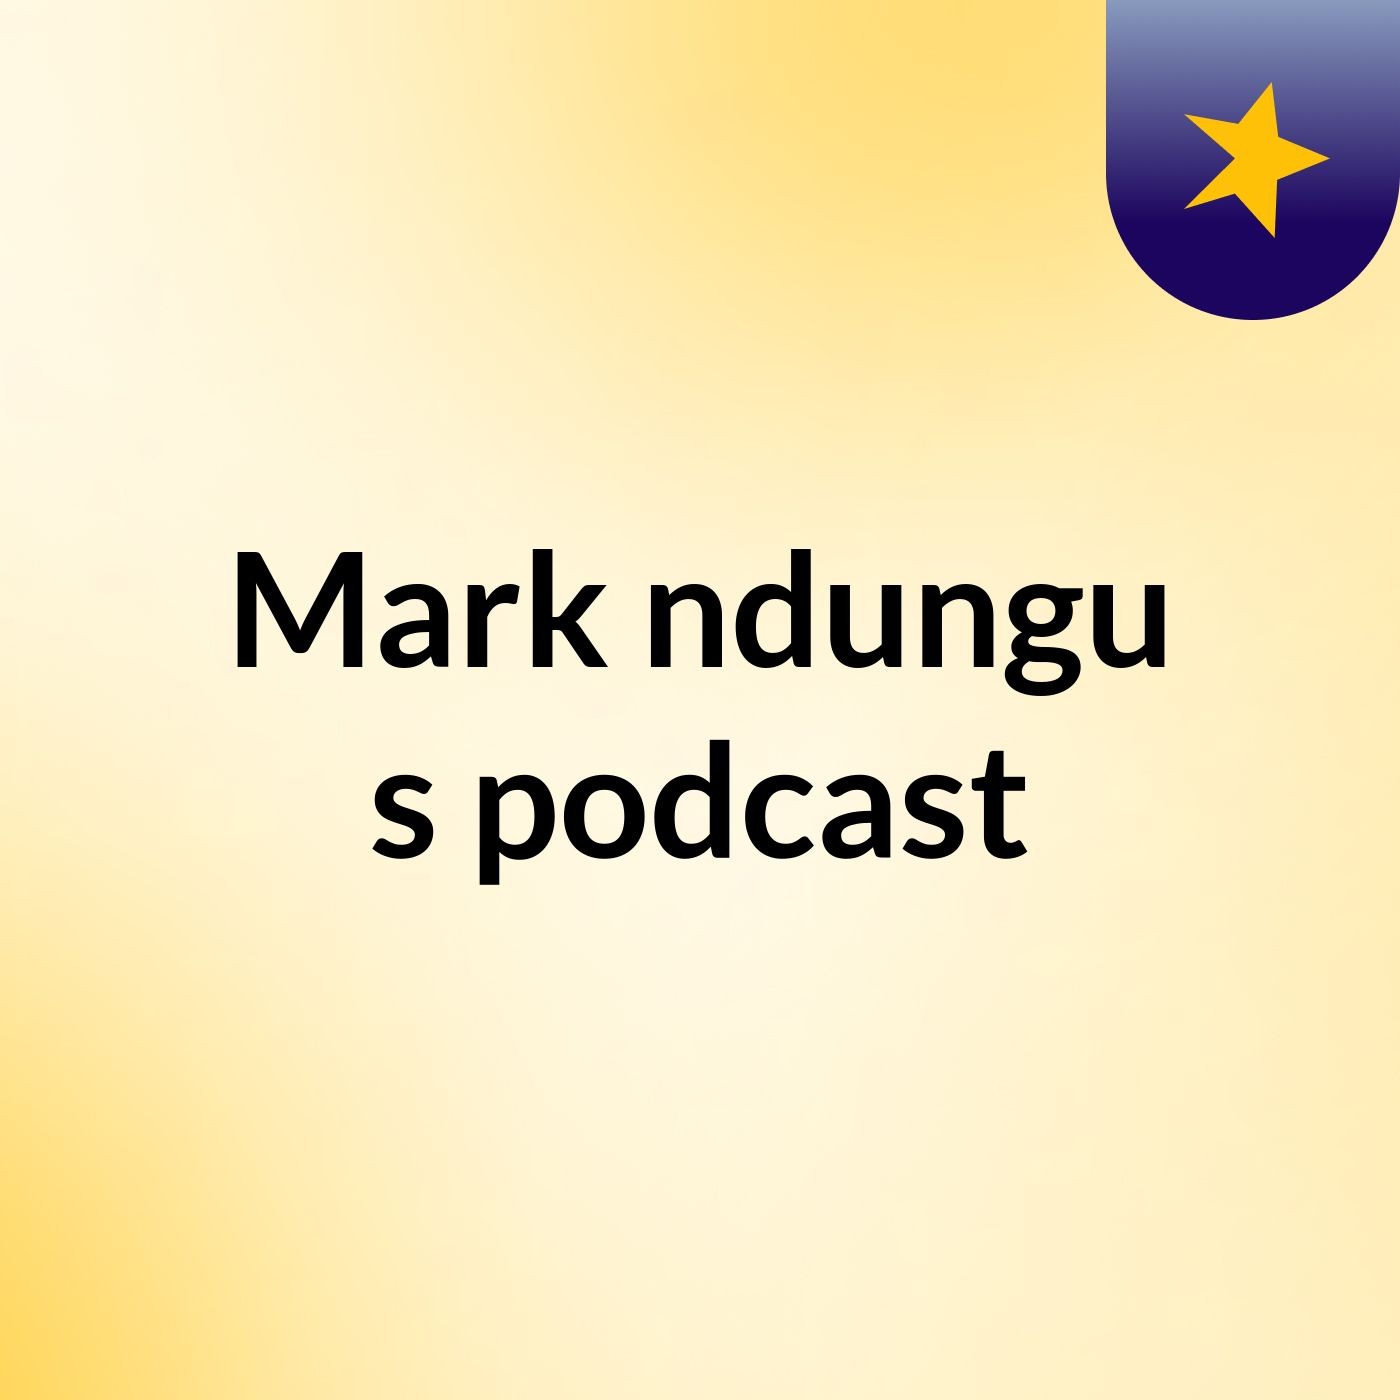 Episode 13 - Mark ndungu's podcast